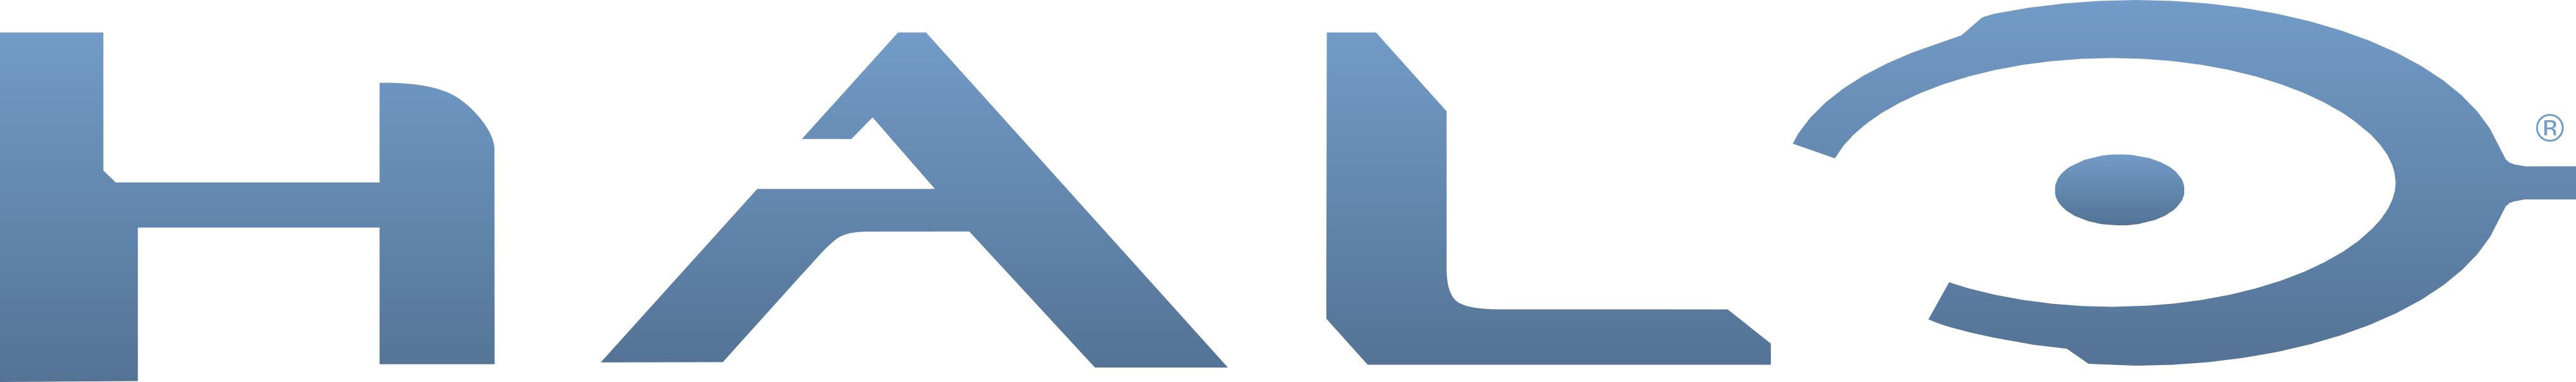 halo logo 1 - Halo Logo